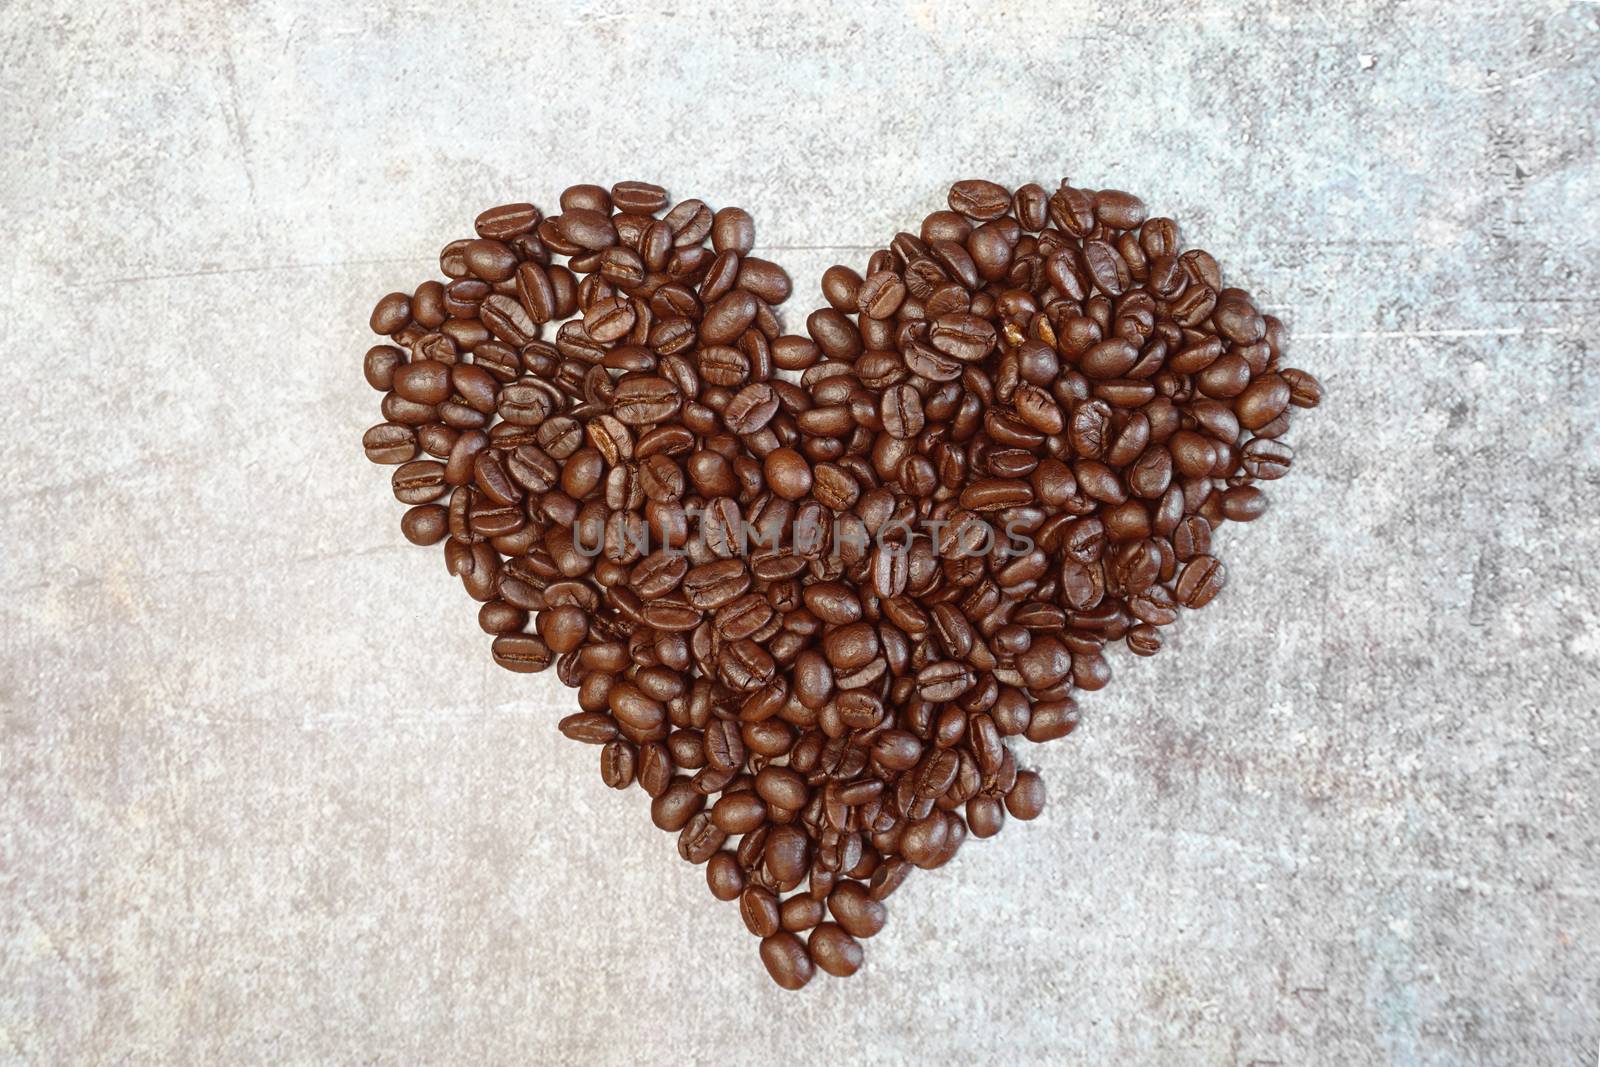 Roasted coffee beans in heart shape.